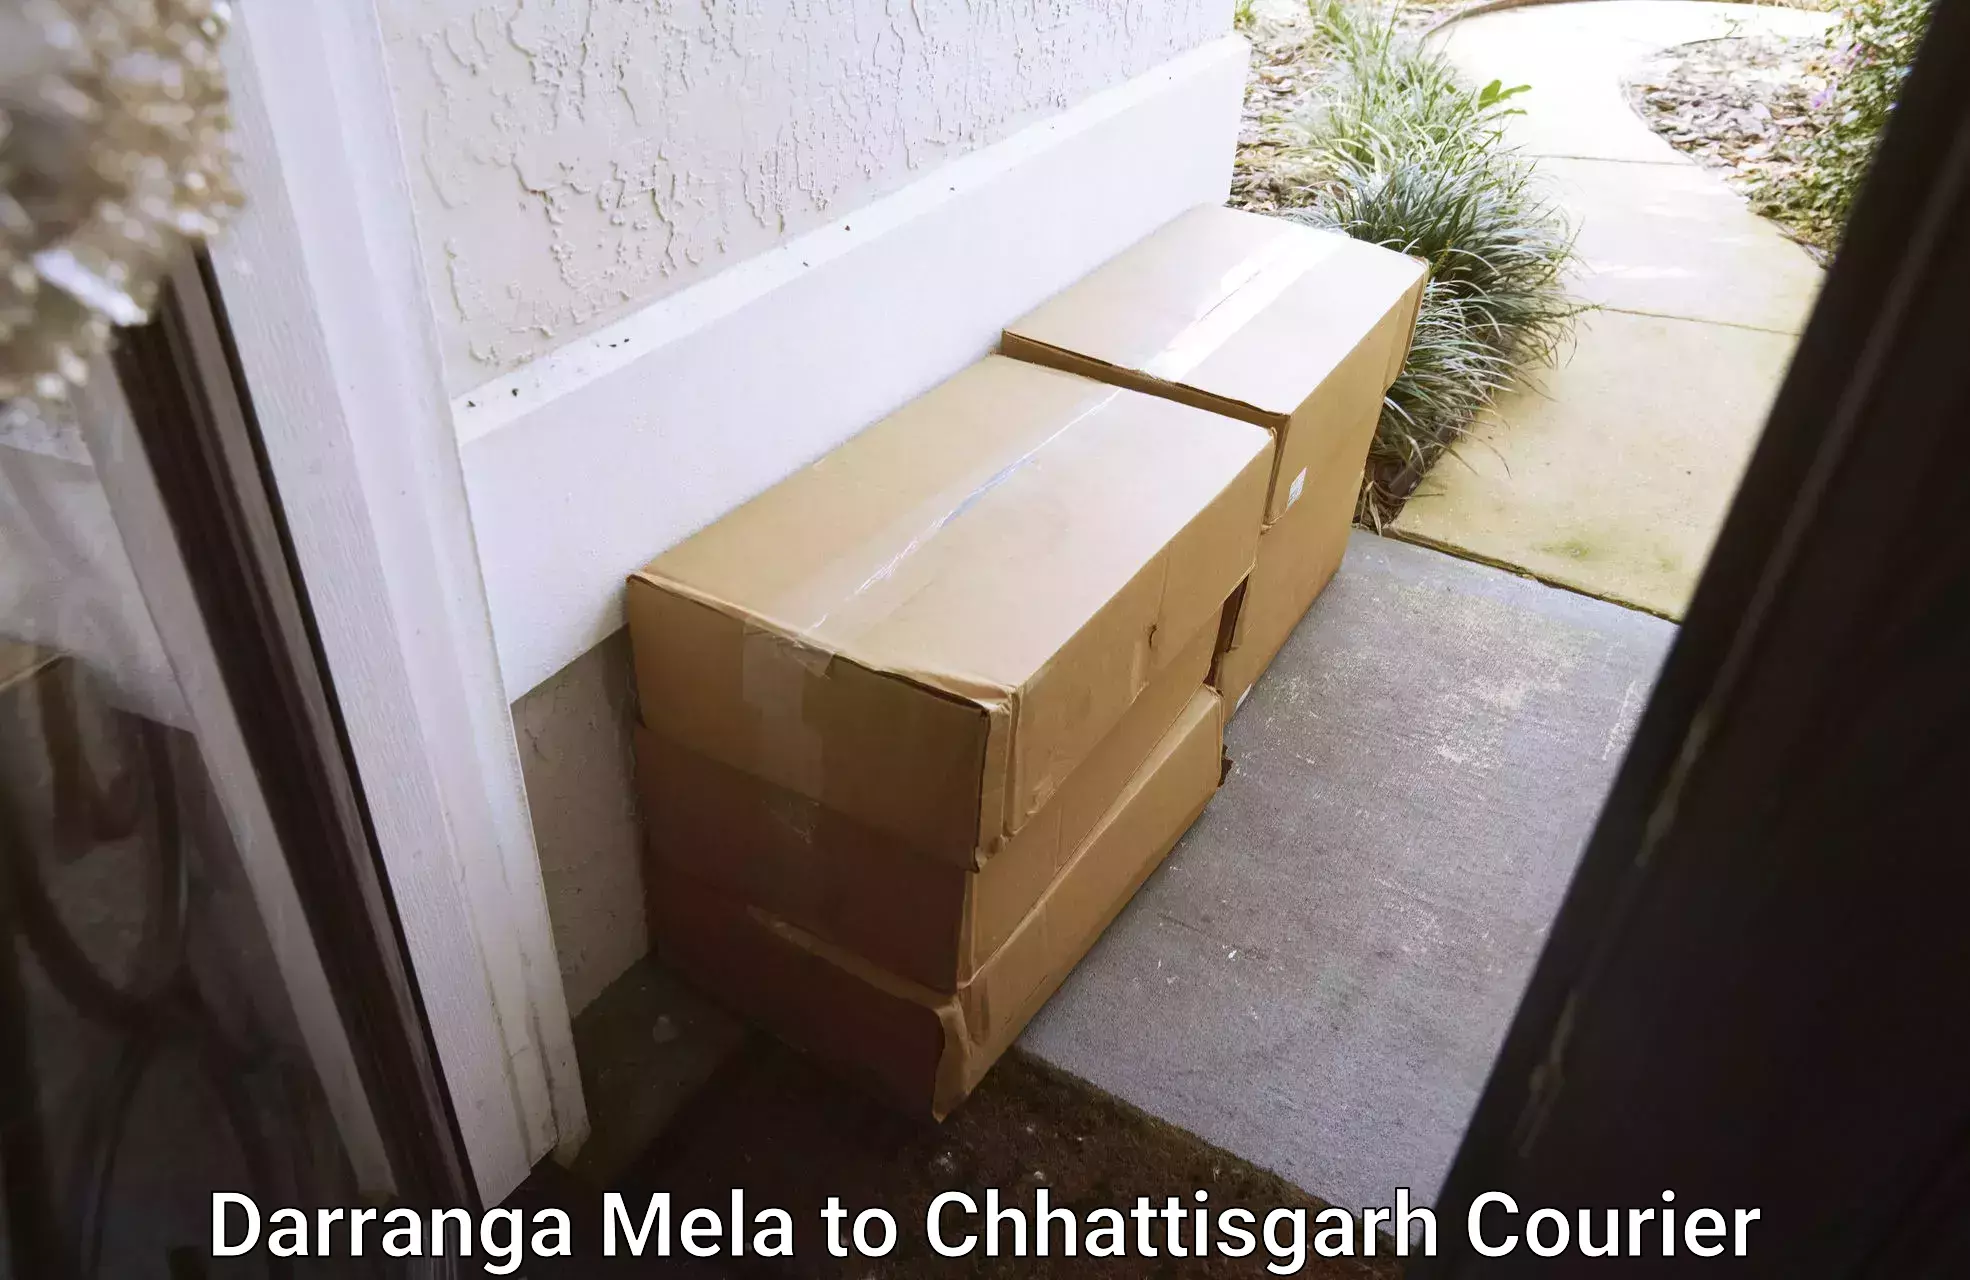 Expedited shipping methods Darranga Mela to Chhattisgarh